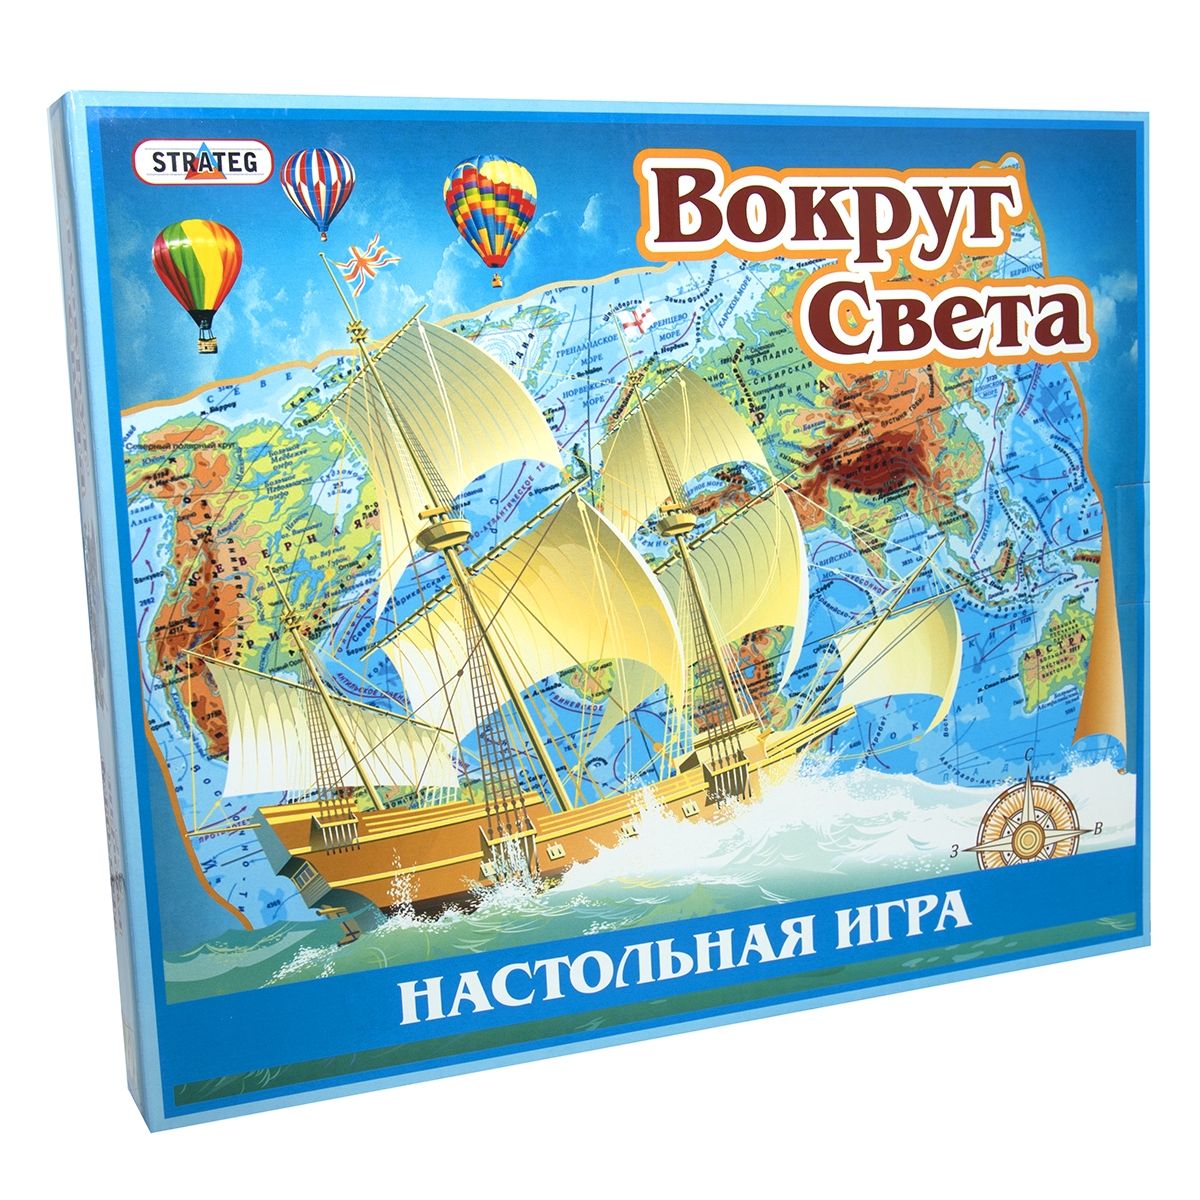 Board game "Around the world" (rus.) (723)